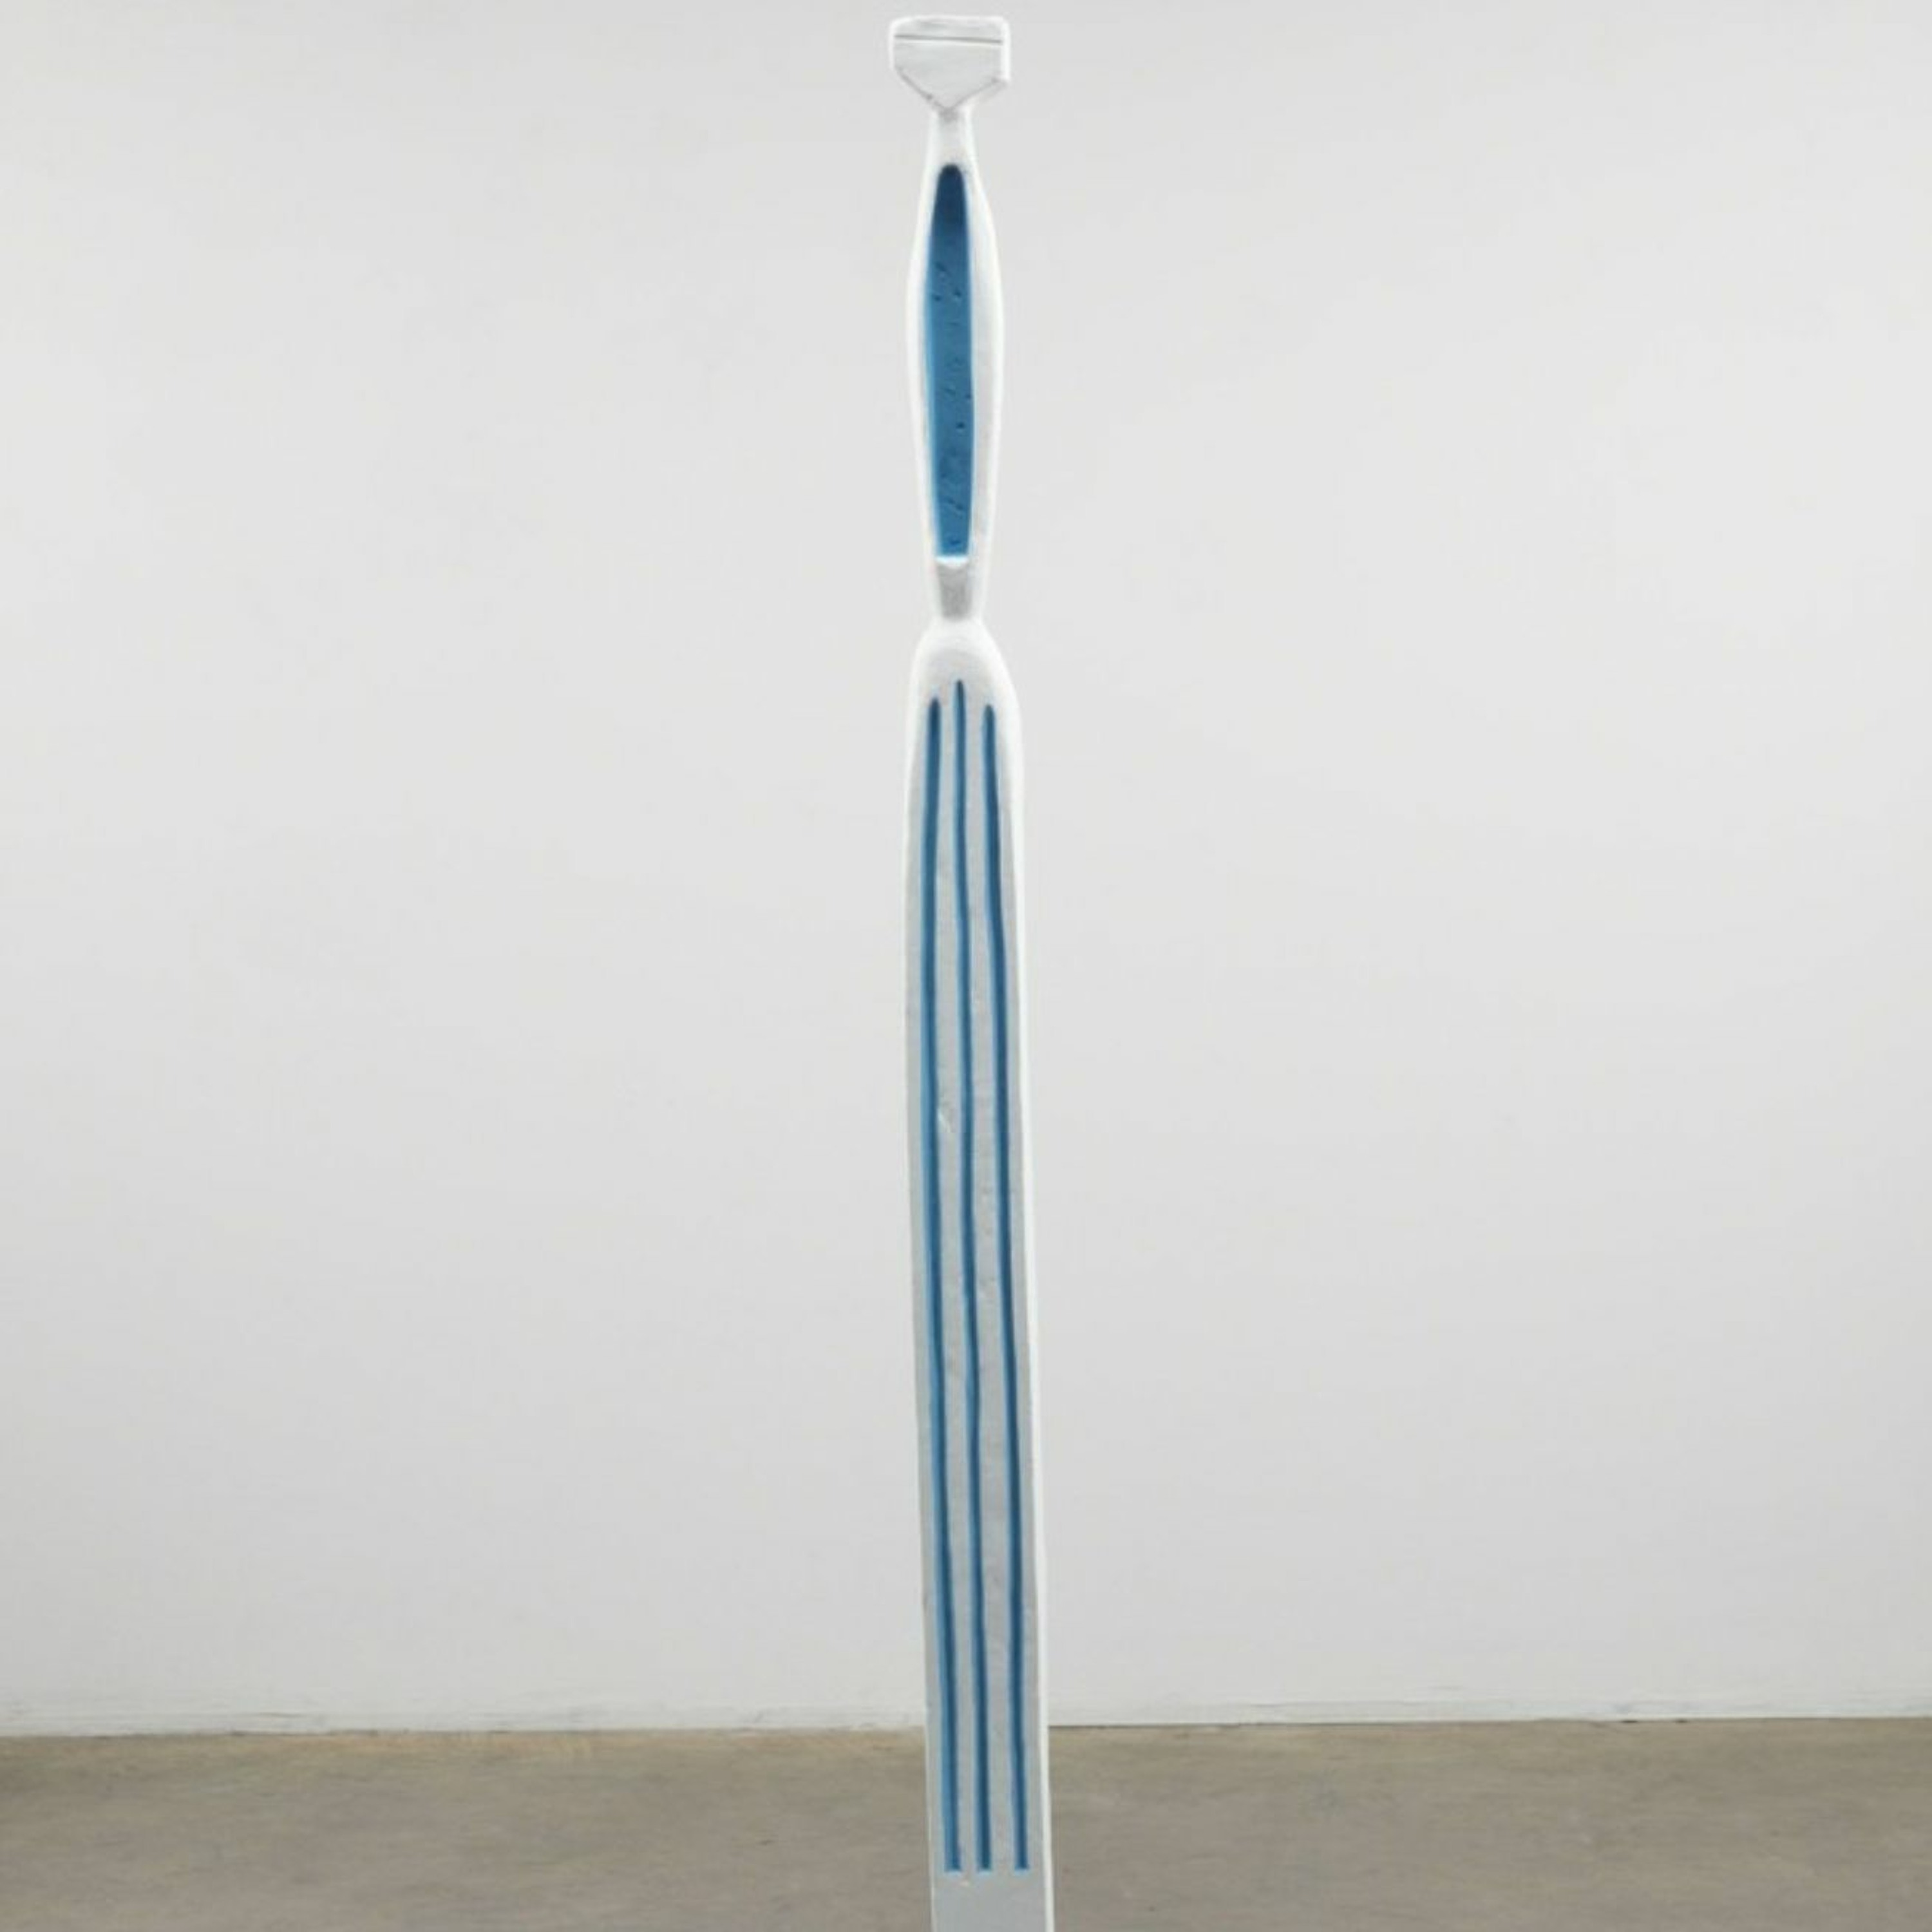 Ep. 44 - Louise Bourgeois' "Pillar" (1949-50)